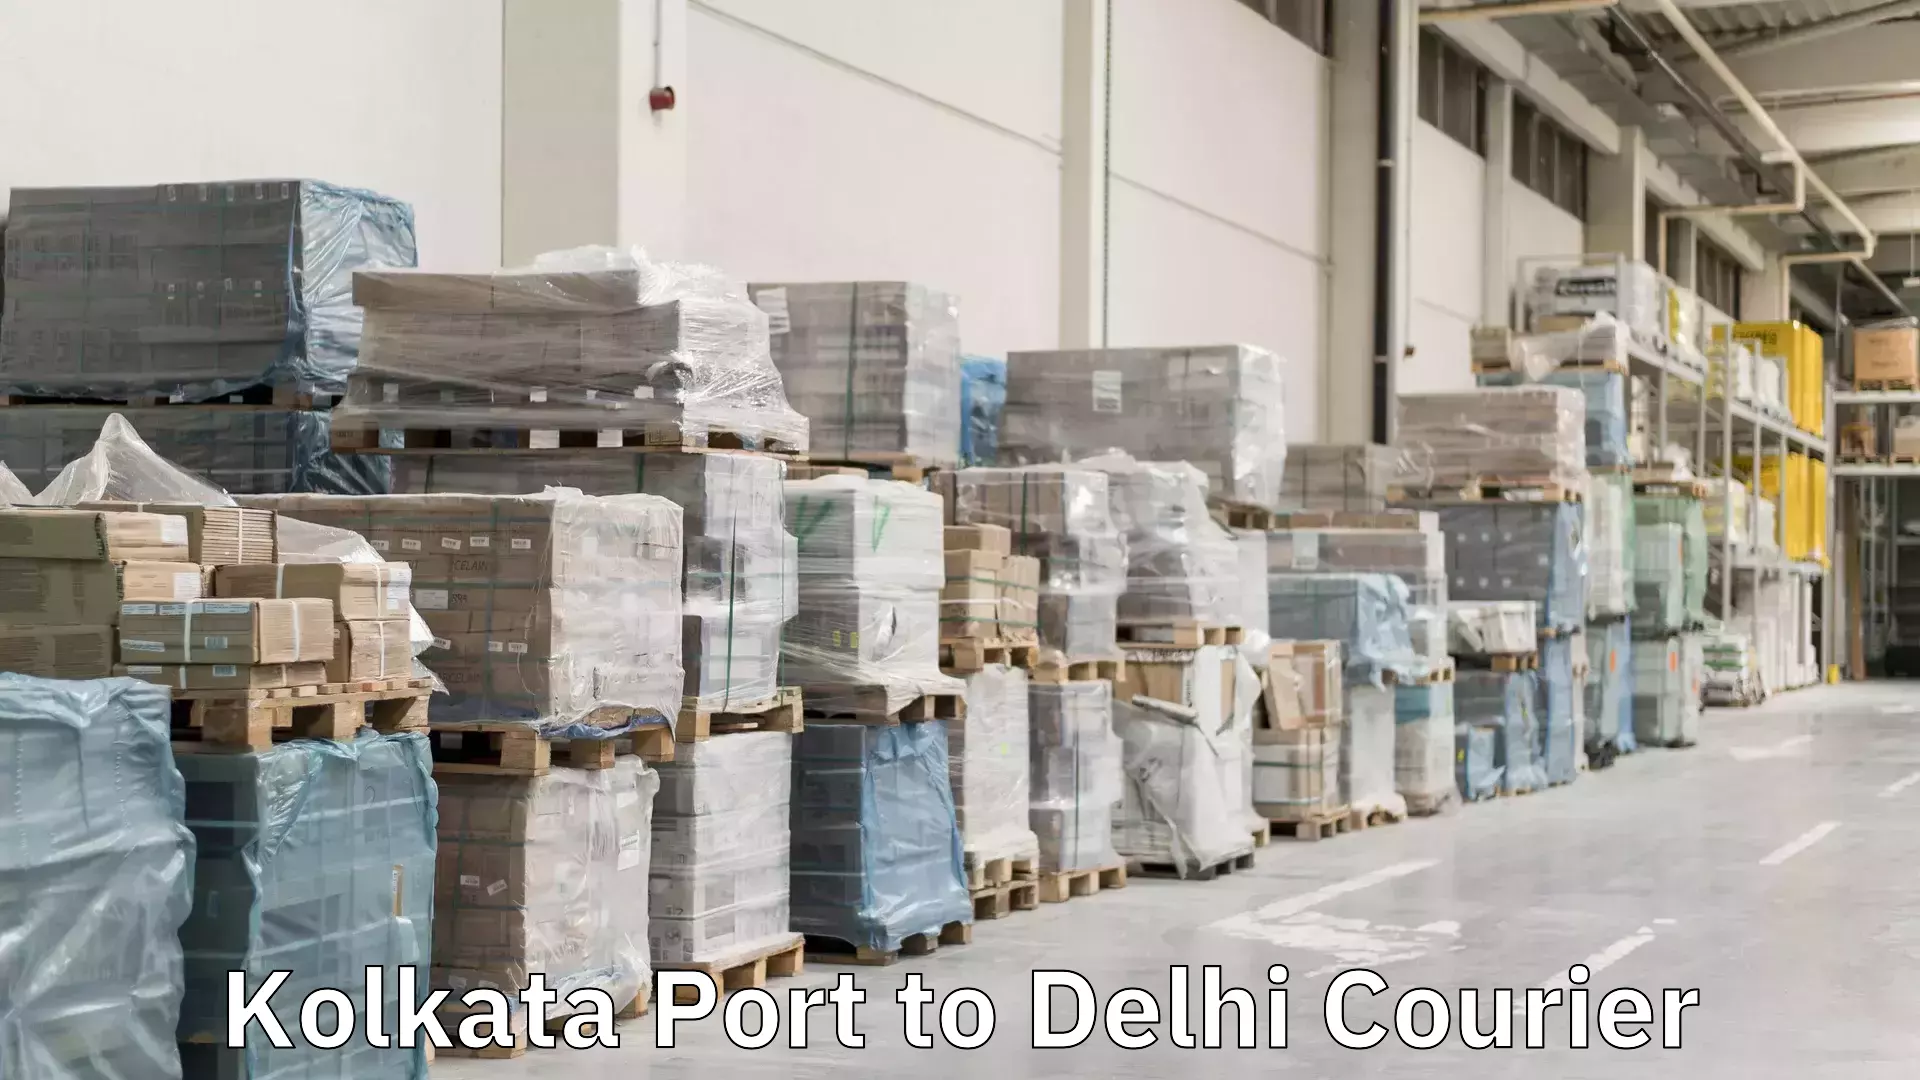 Courier service efficiency Kolkata Port to Delhi